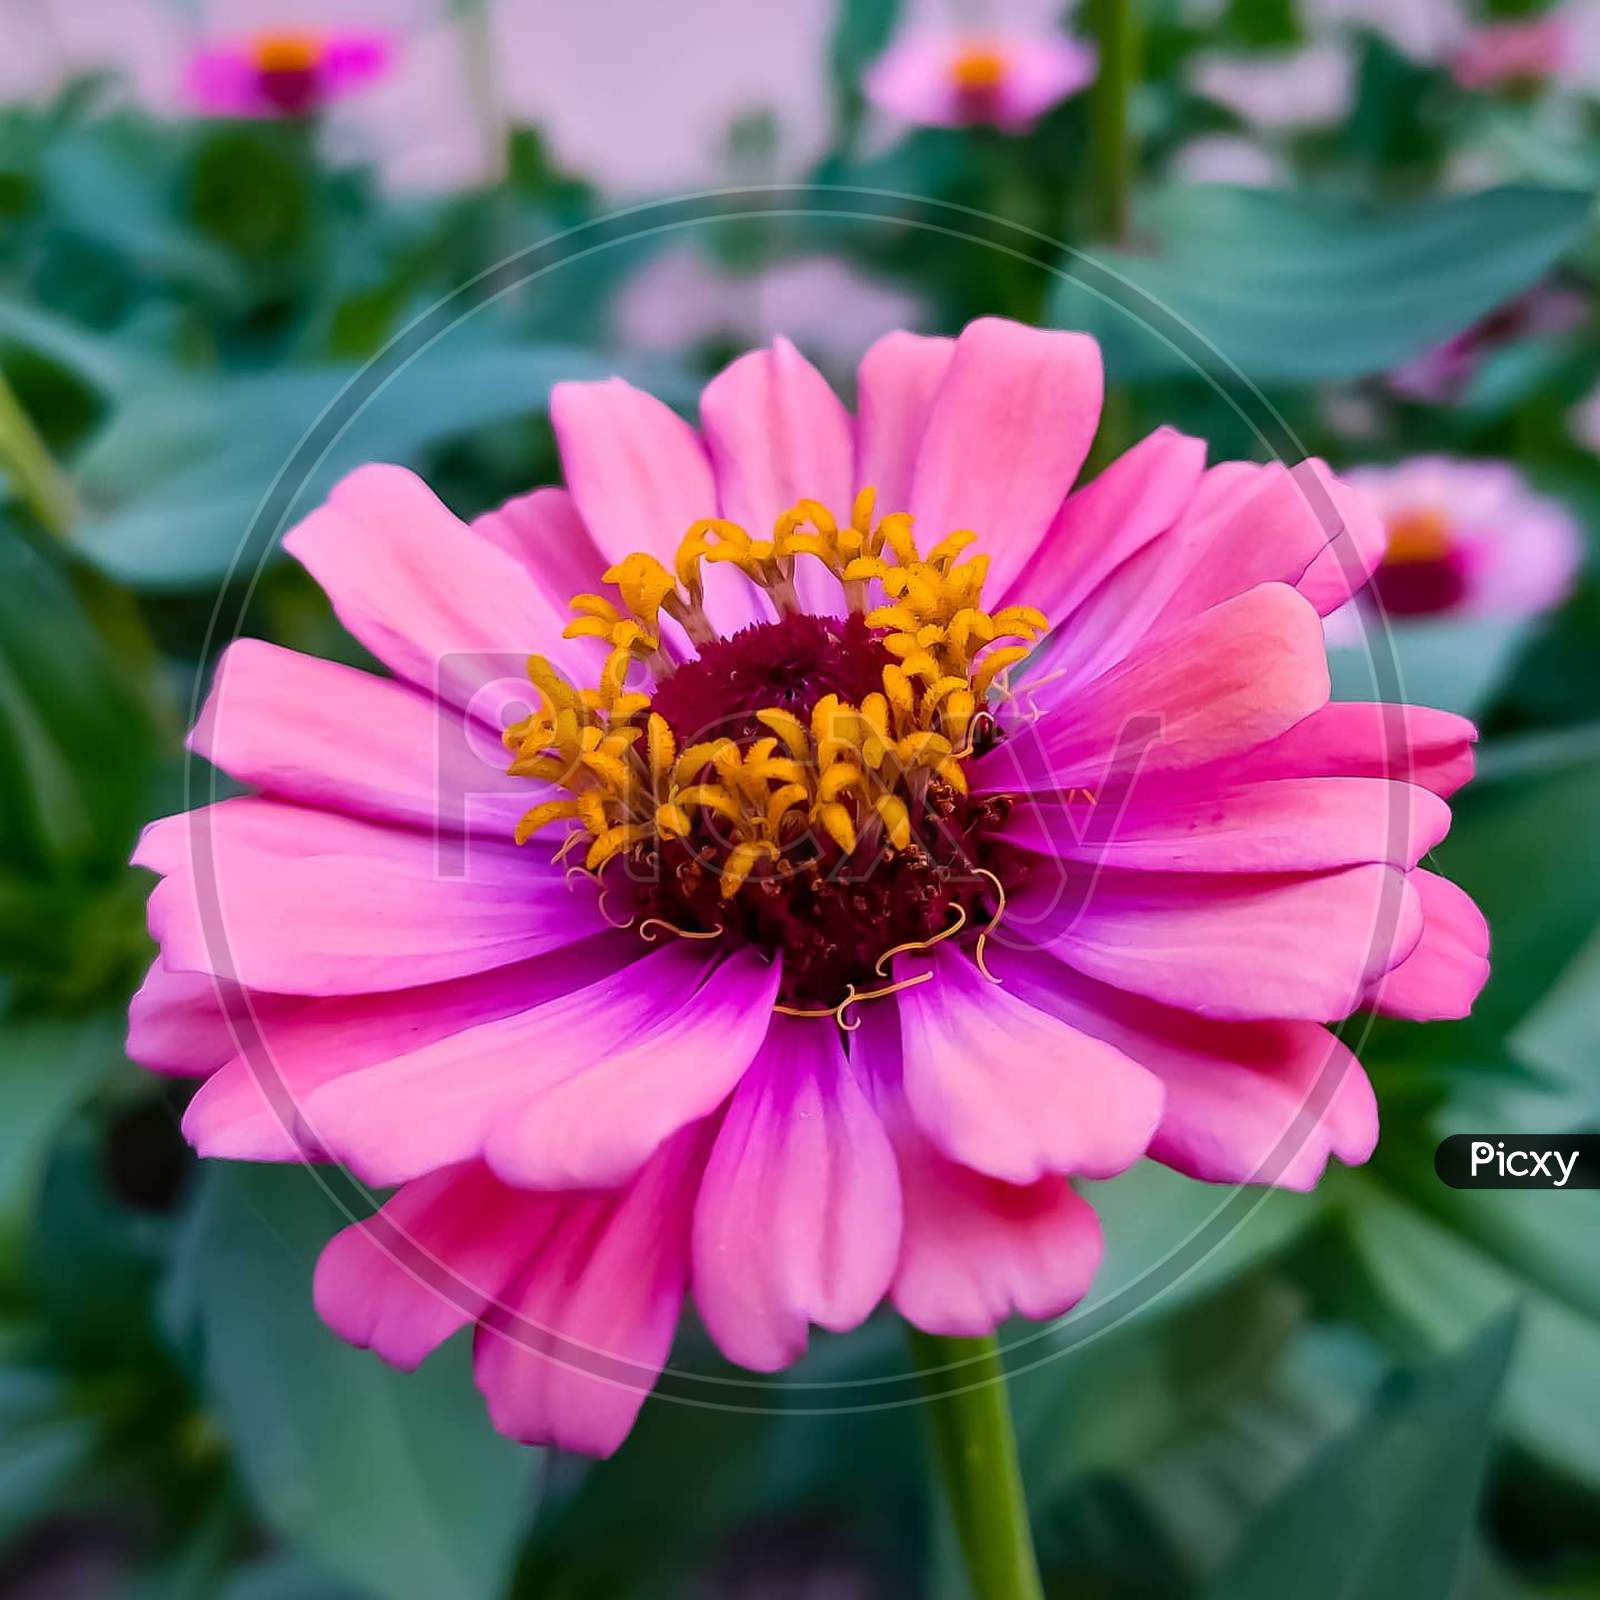 A beautiful pink daisy flower, Zinnia.